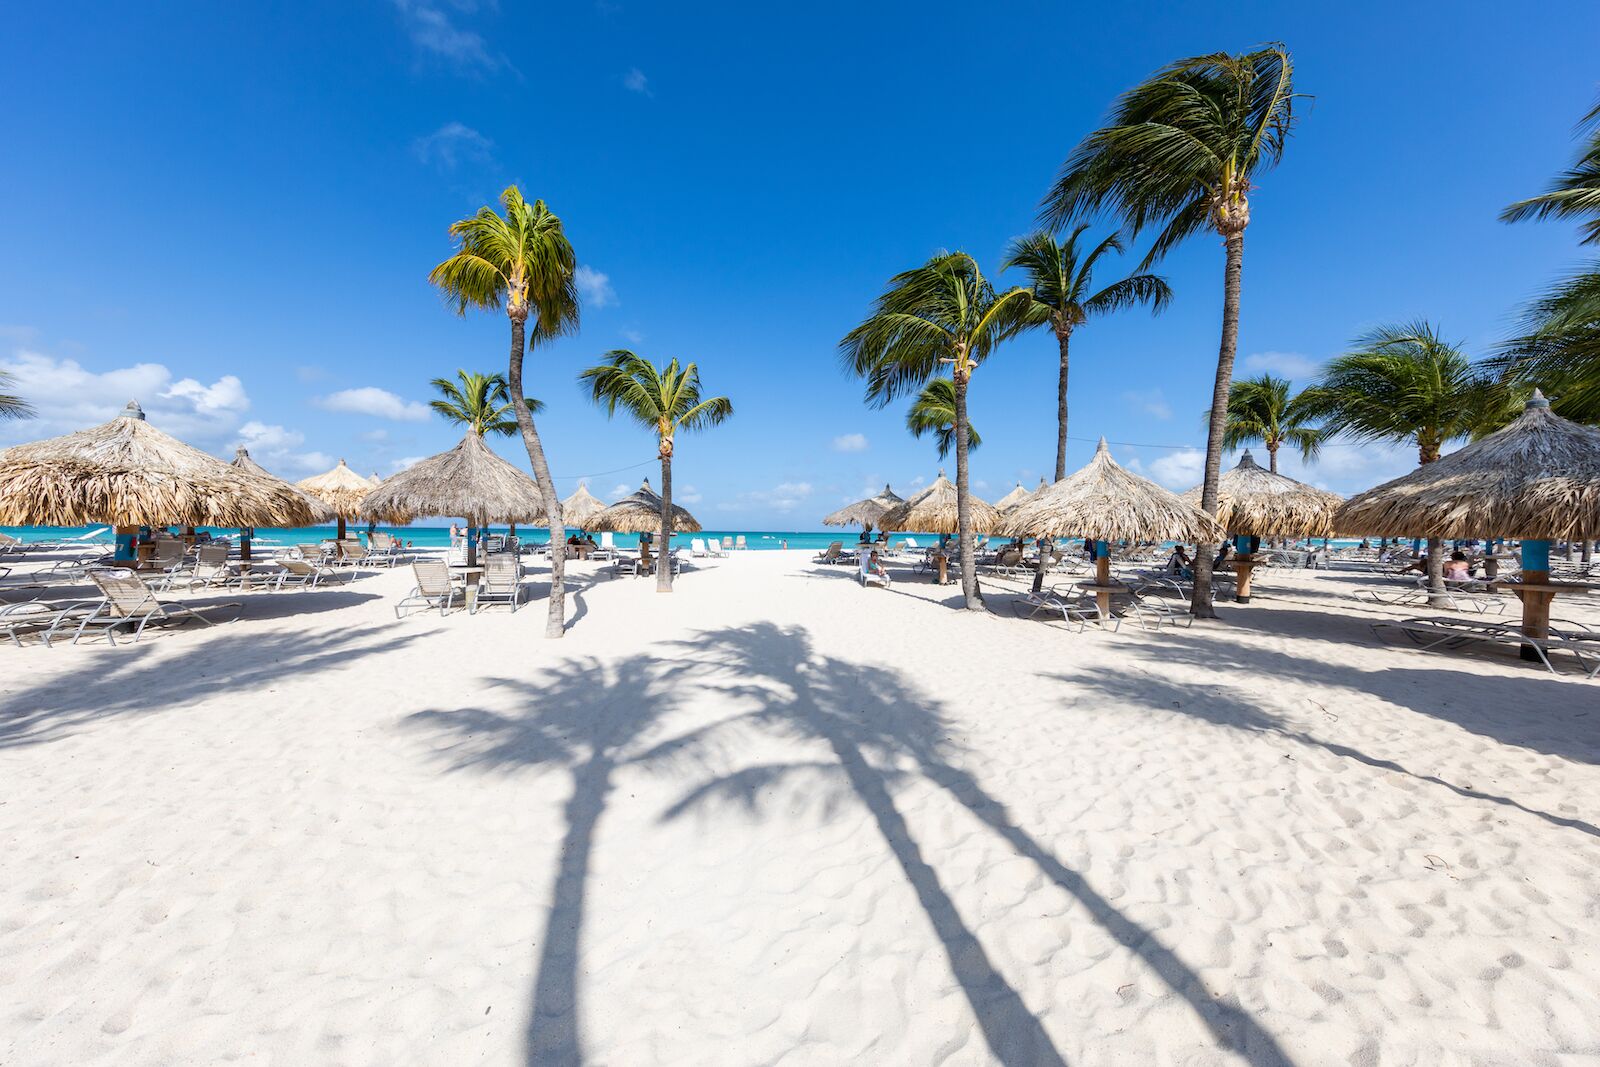 Hilton Aruba Caribbean Resort & Casino beach and trees